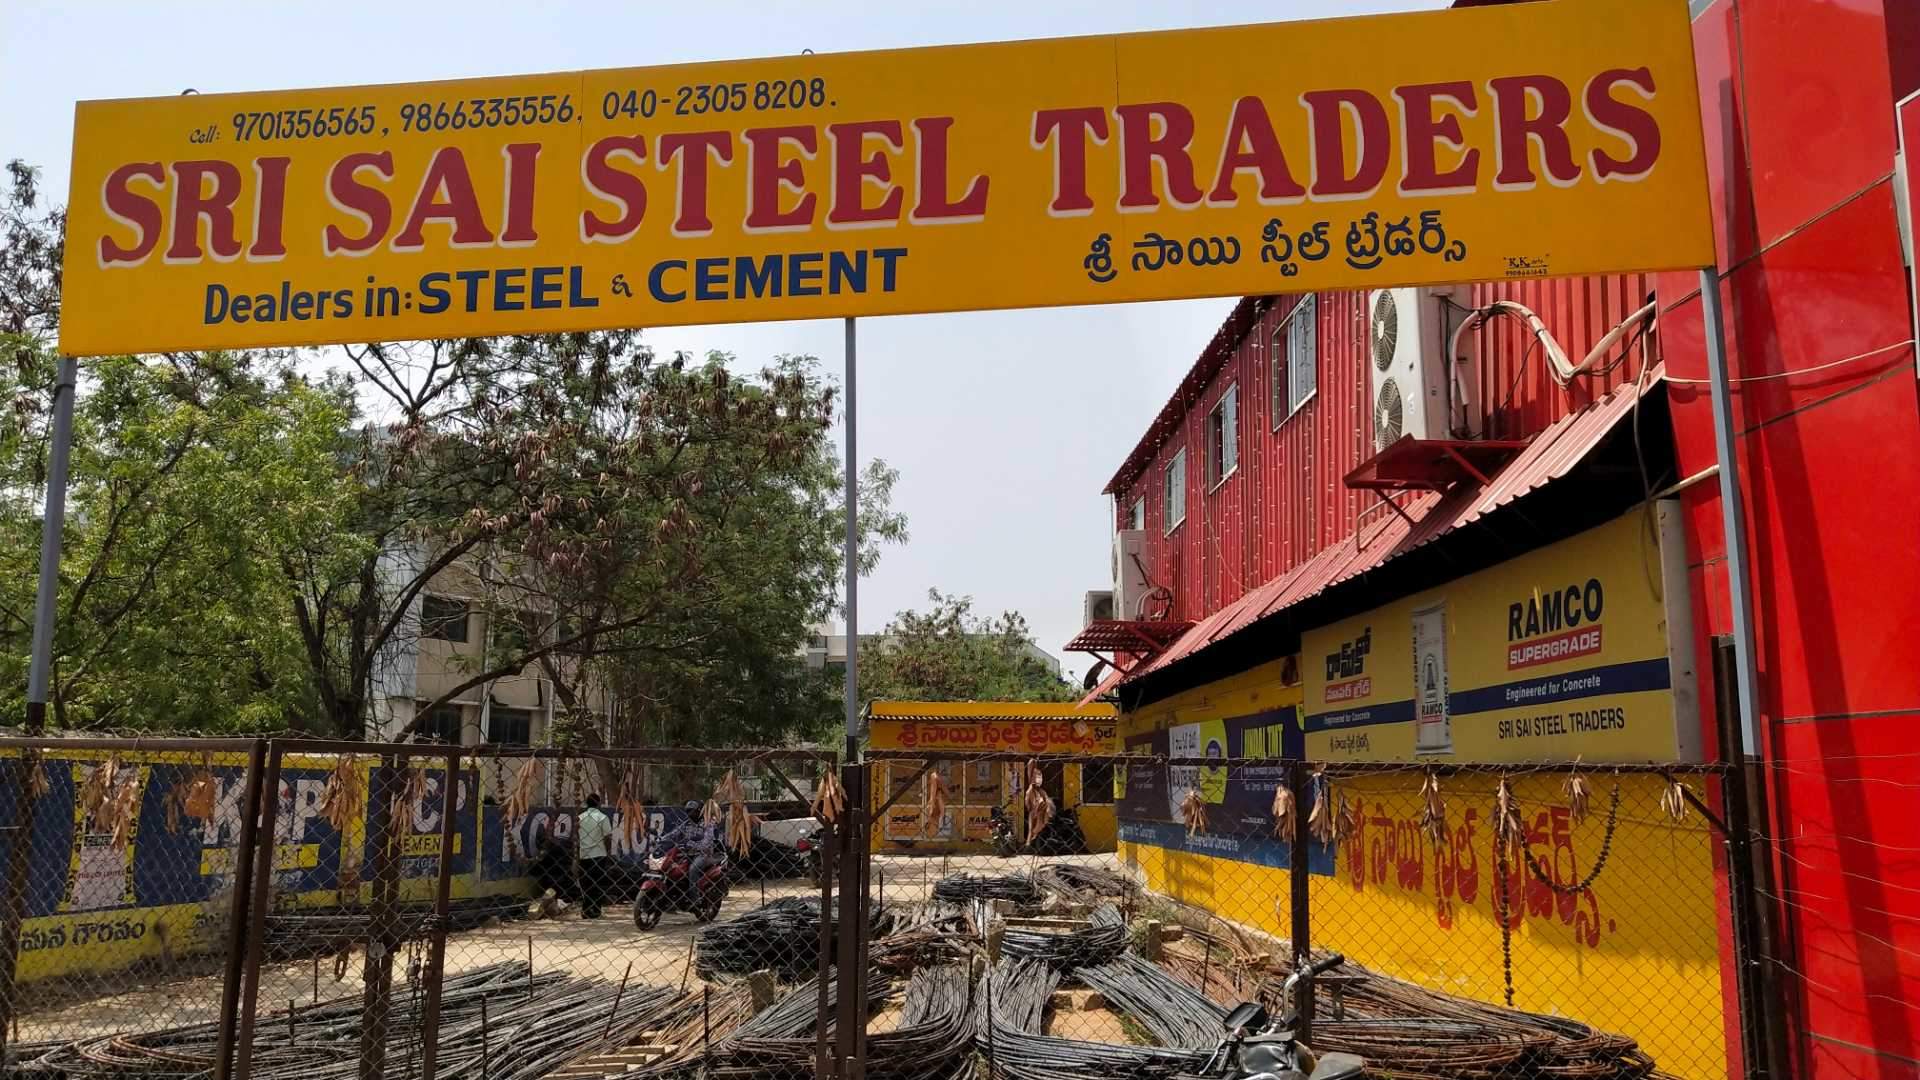 Sri Sai Steel Traders